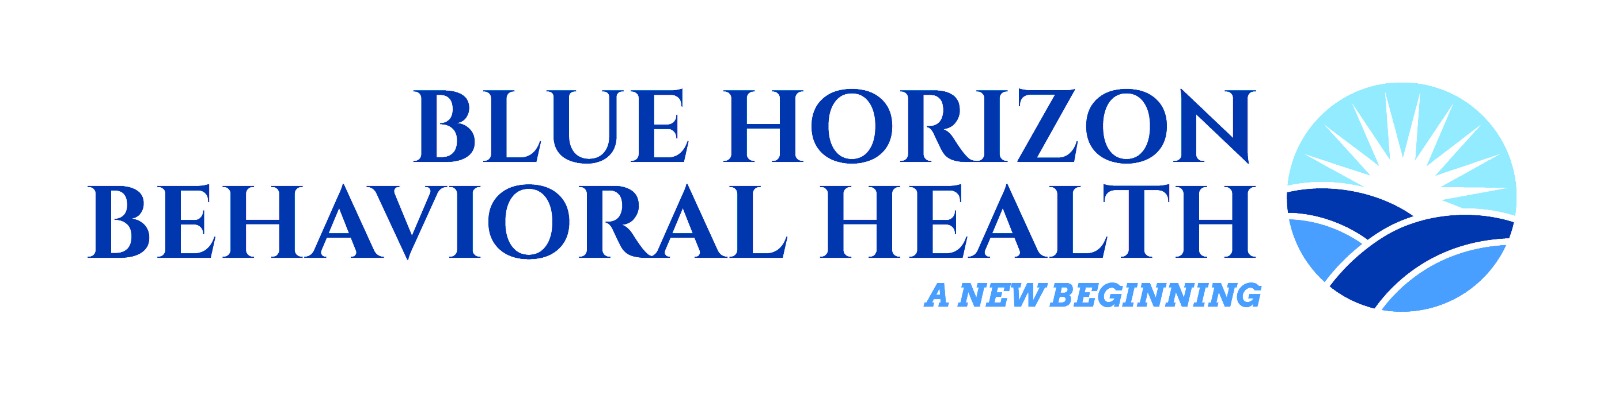 Blue Horizon Behavioral Health